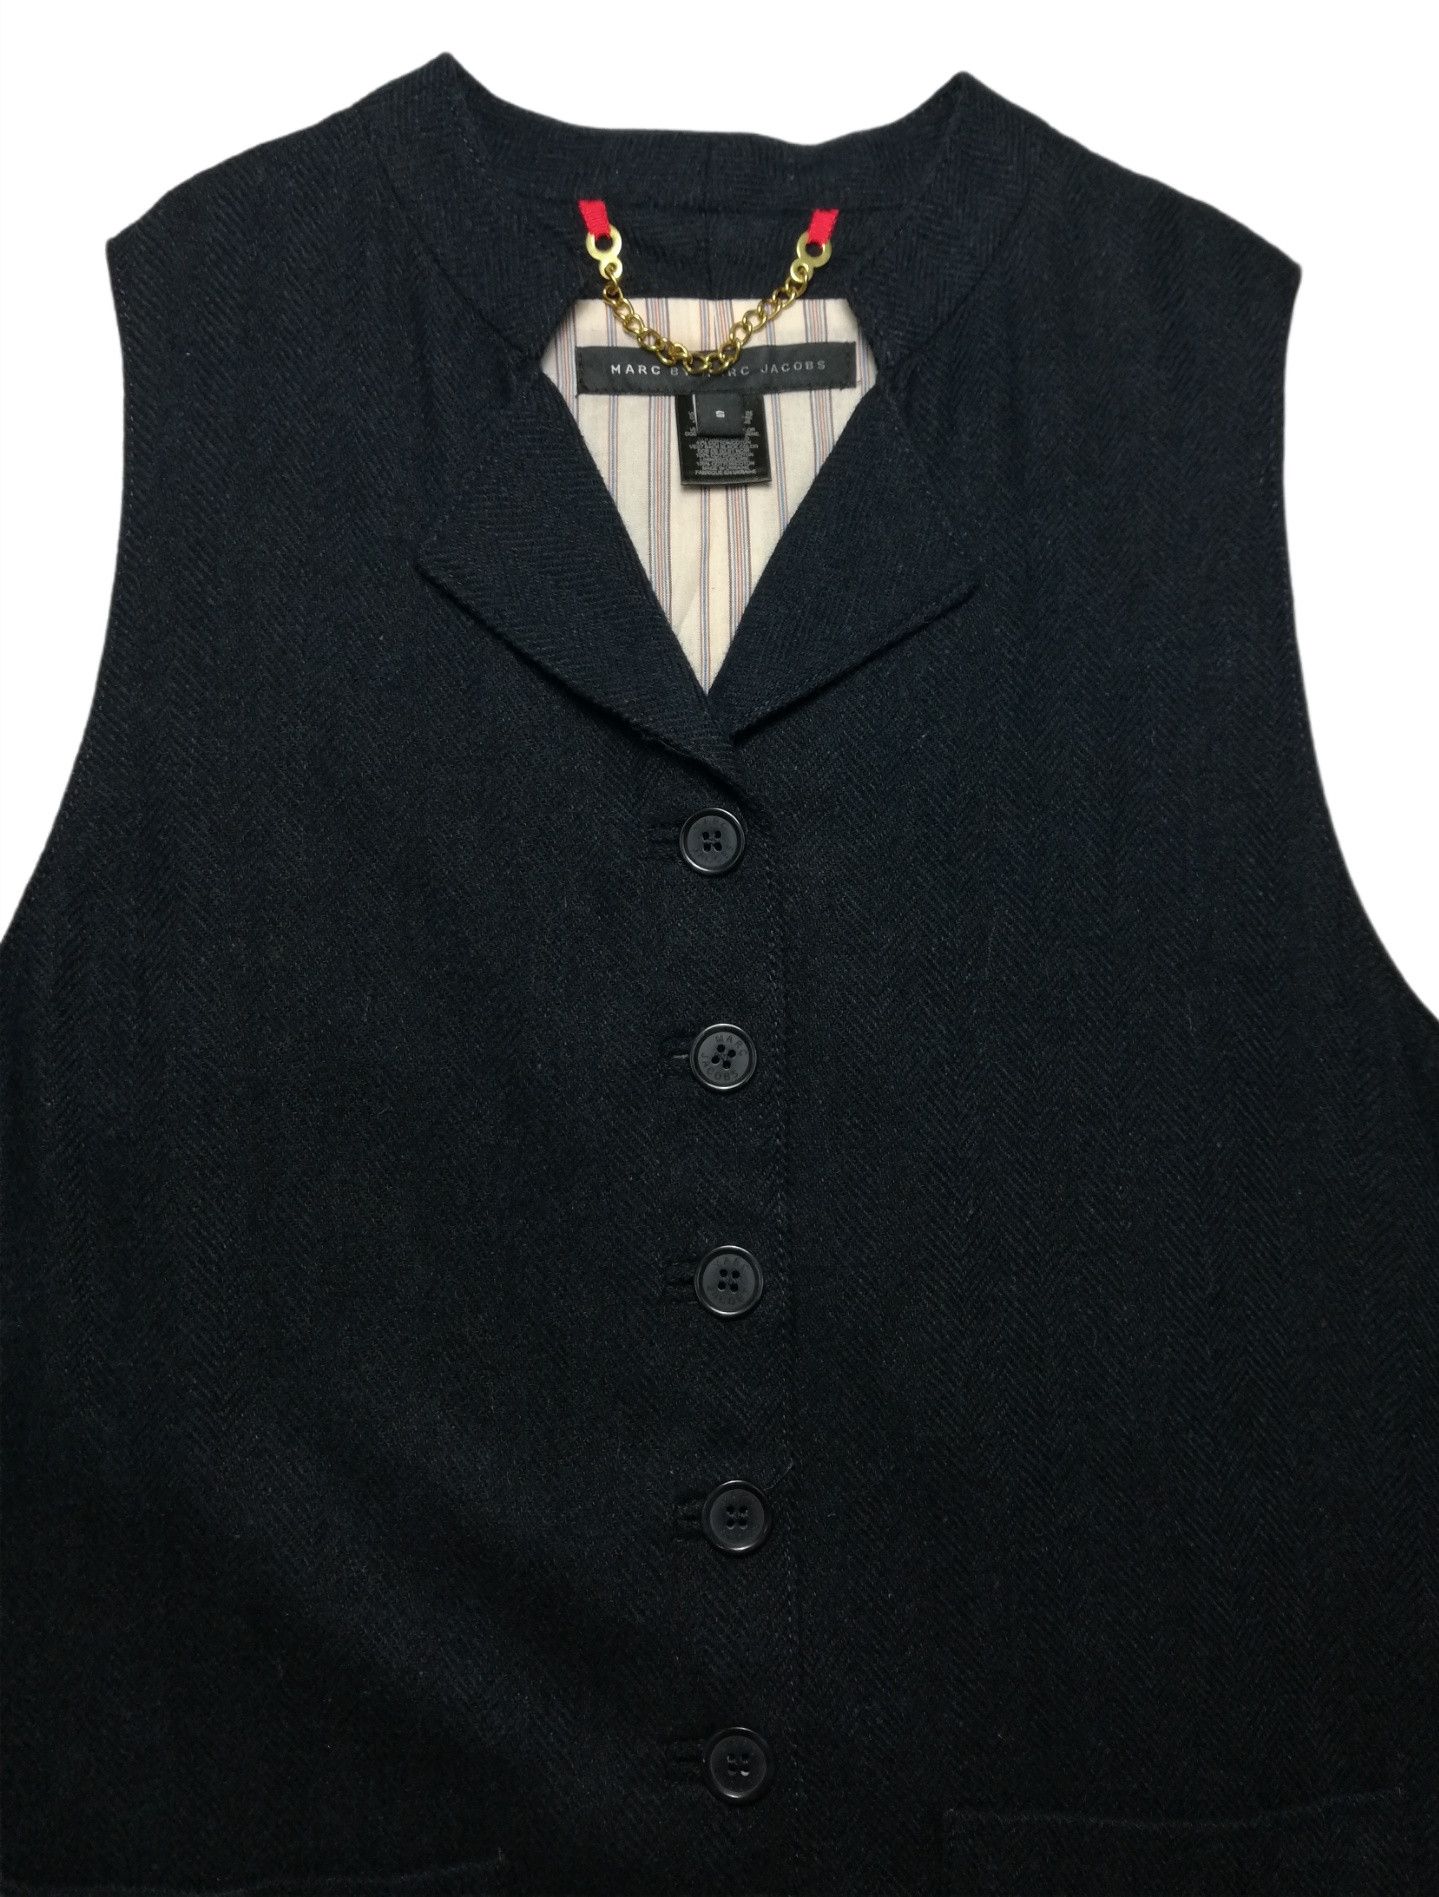 Marc Jacobs 🔥DOPE RARE Marc Jacobs Wool Herringbone Lined Stripe Vest Size US S / EU 44-46 / 1 - 6 Thumbnail